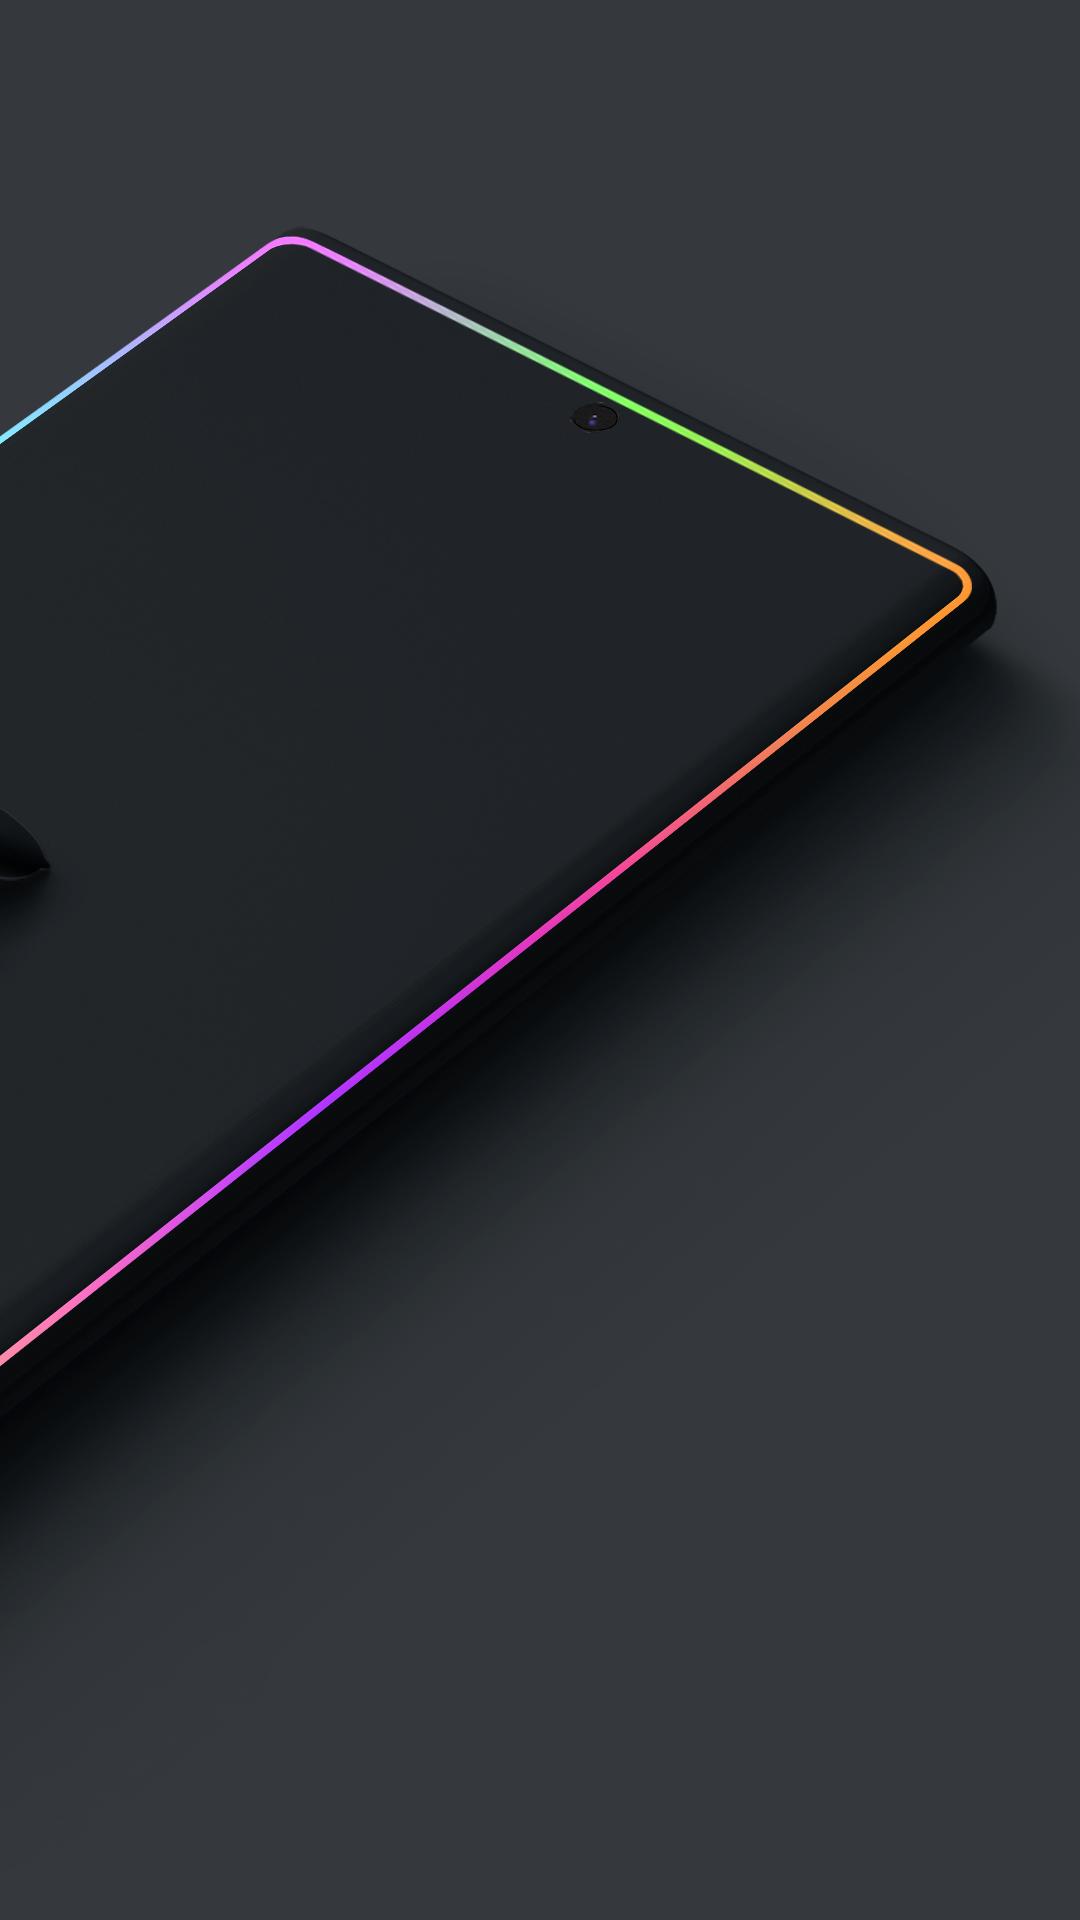 Edge Lighting Colors - Round Colors Galaxy 9.0 Screenshot 2